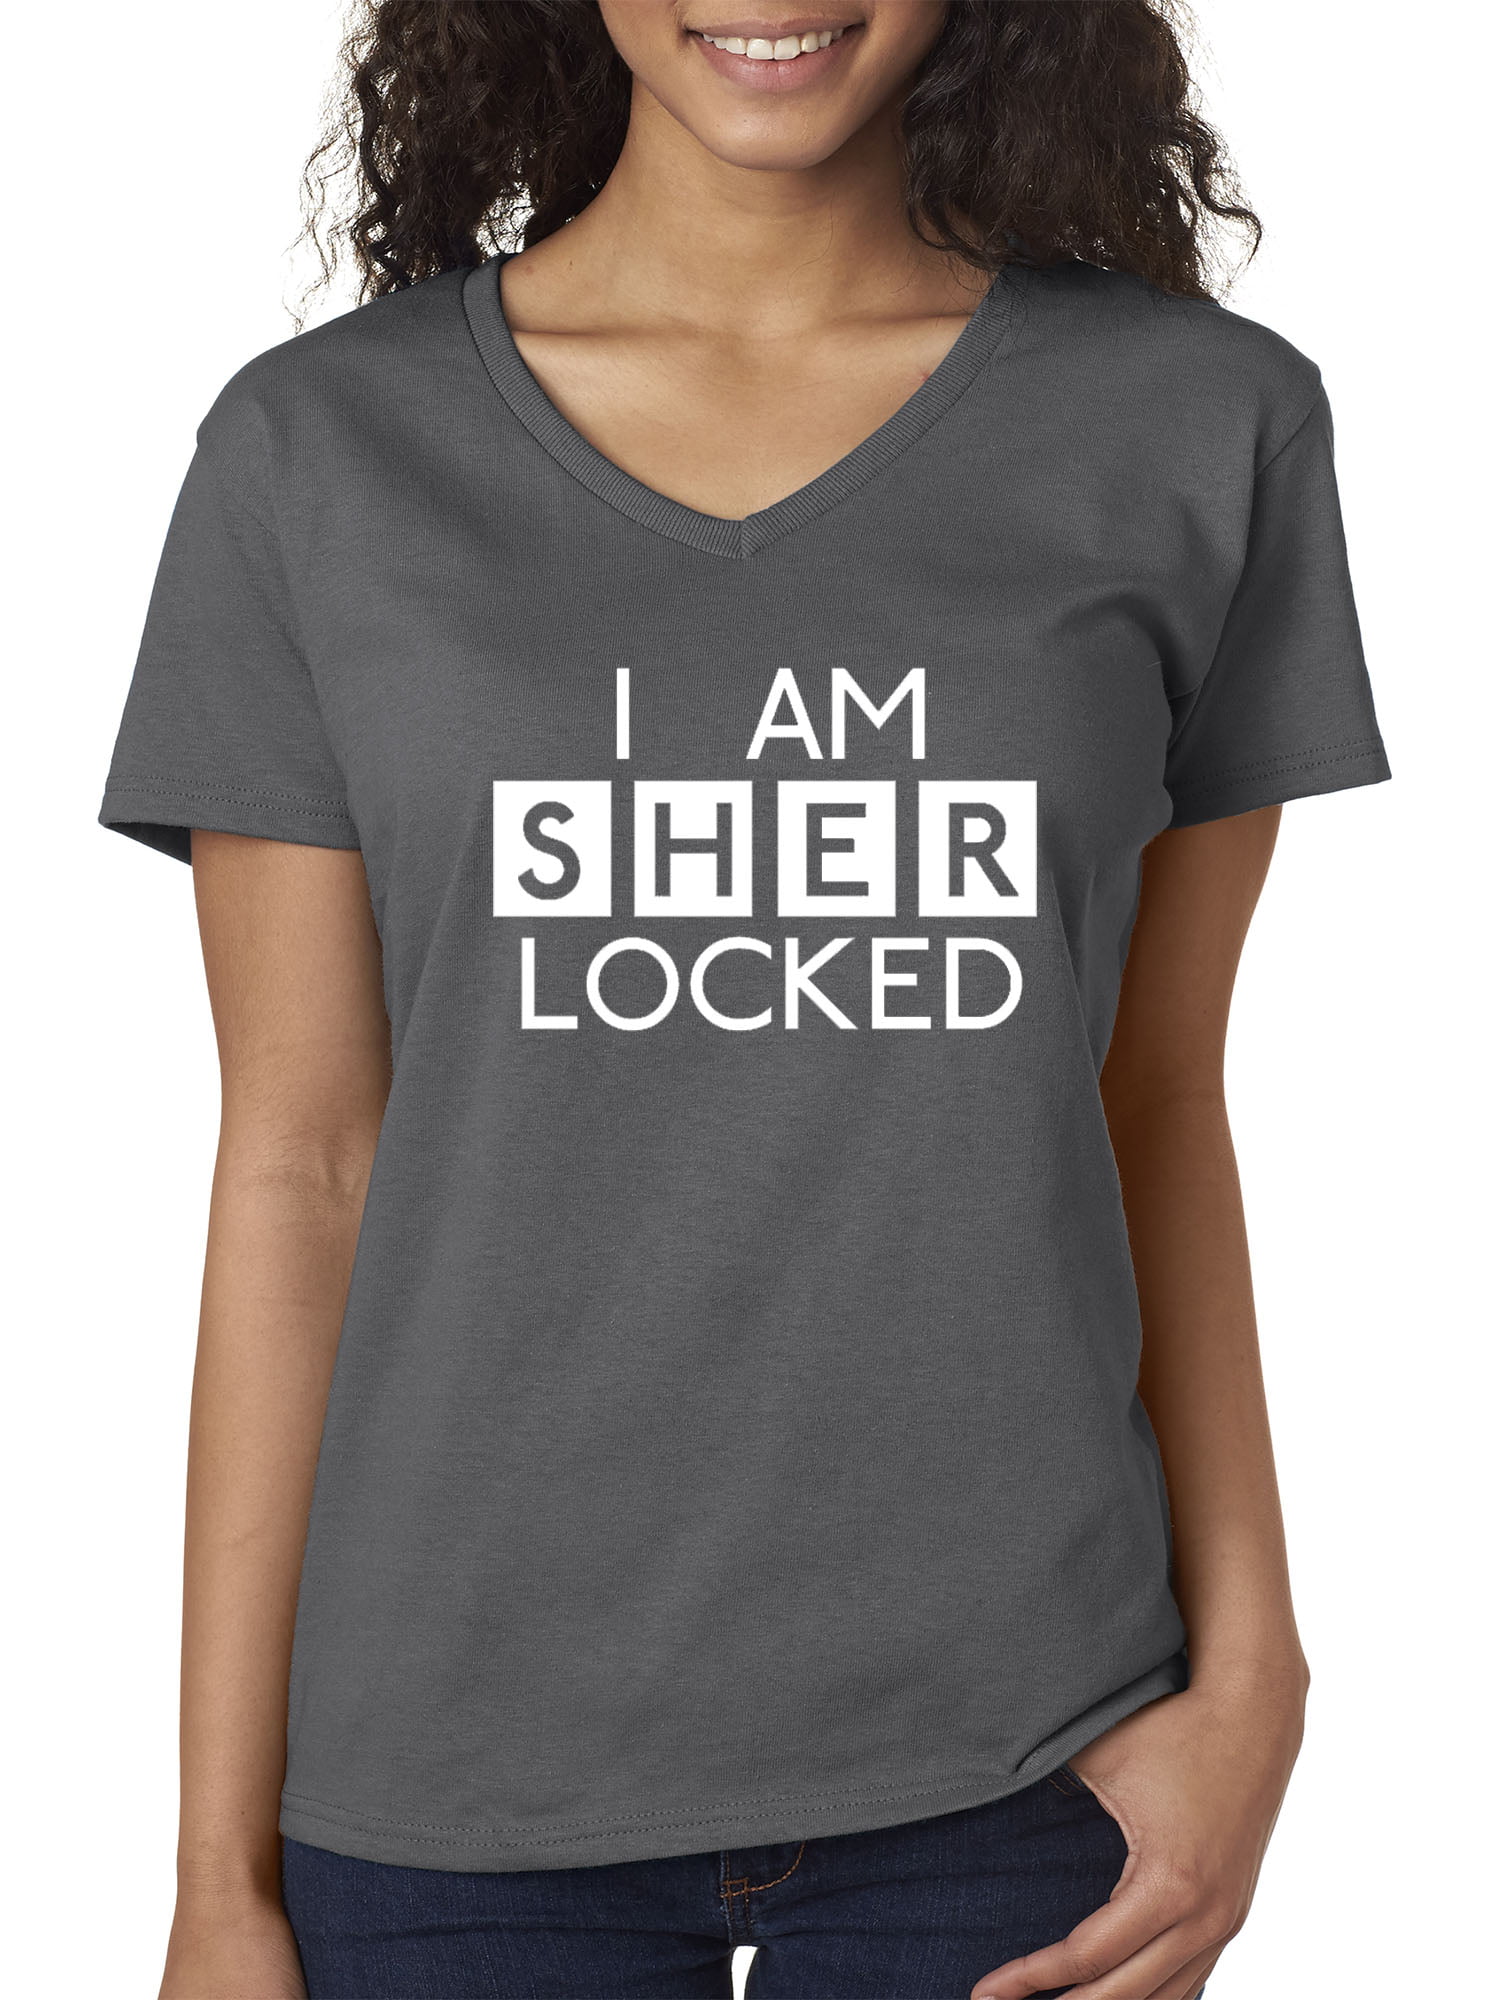 Sherlock Holmes "I Am Sherlocked" T-Shirt S-XXL Mens Womens 